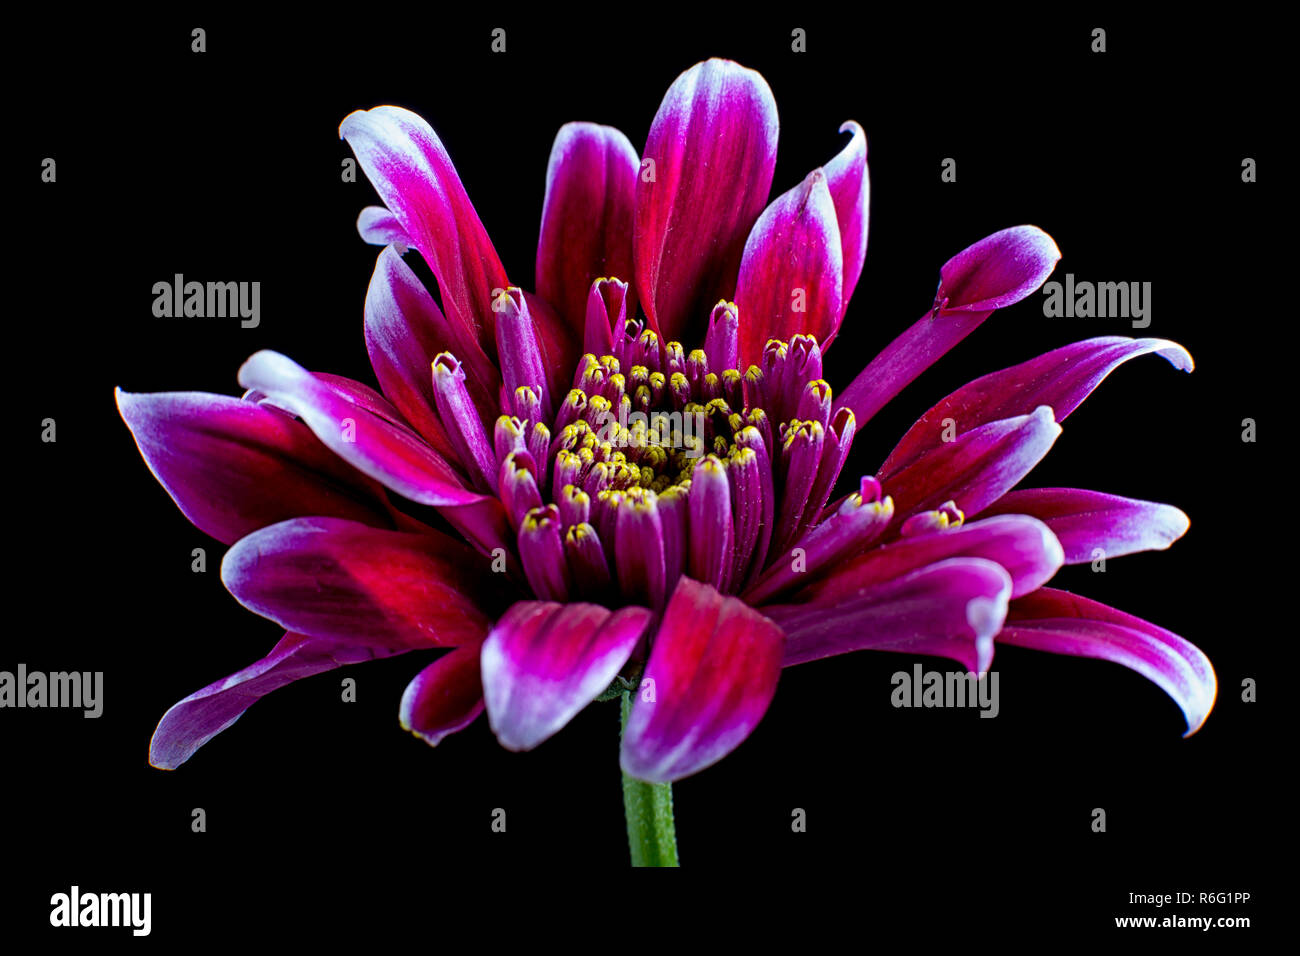 aster flower macro details Stock Photo